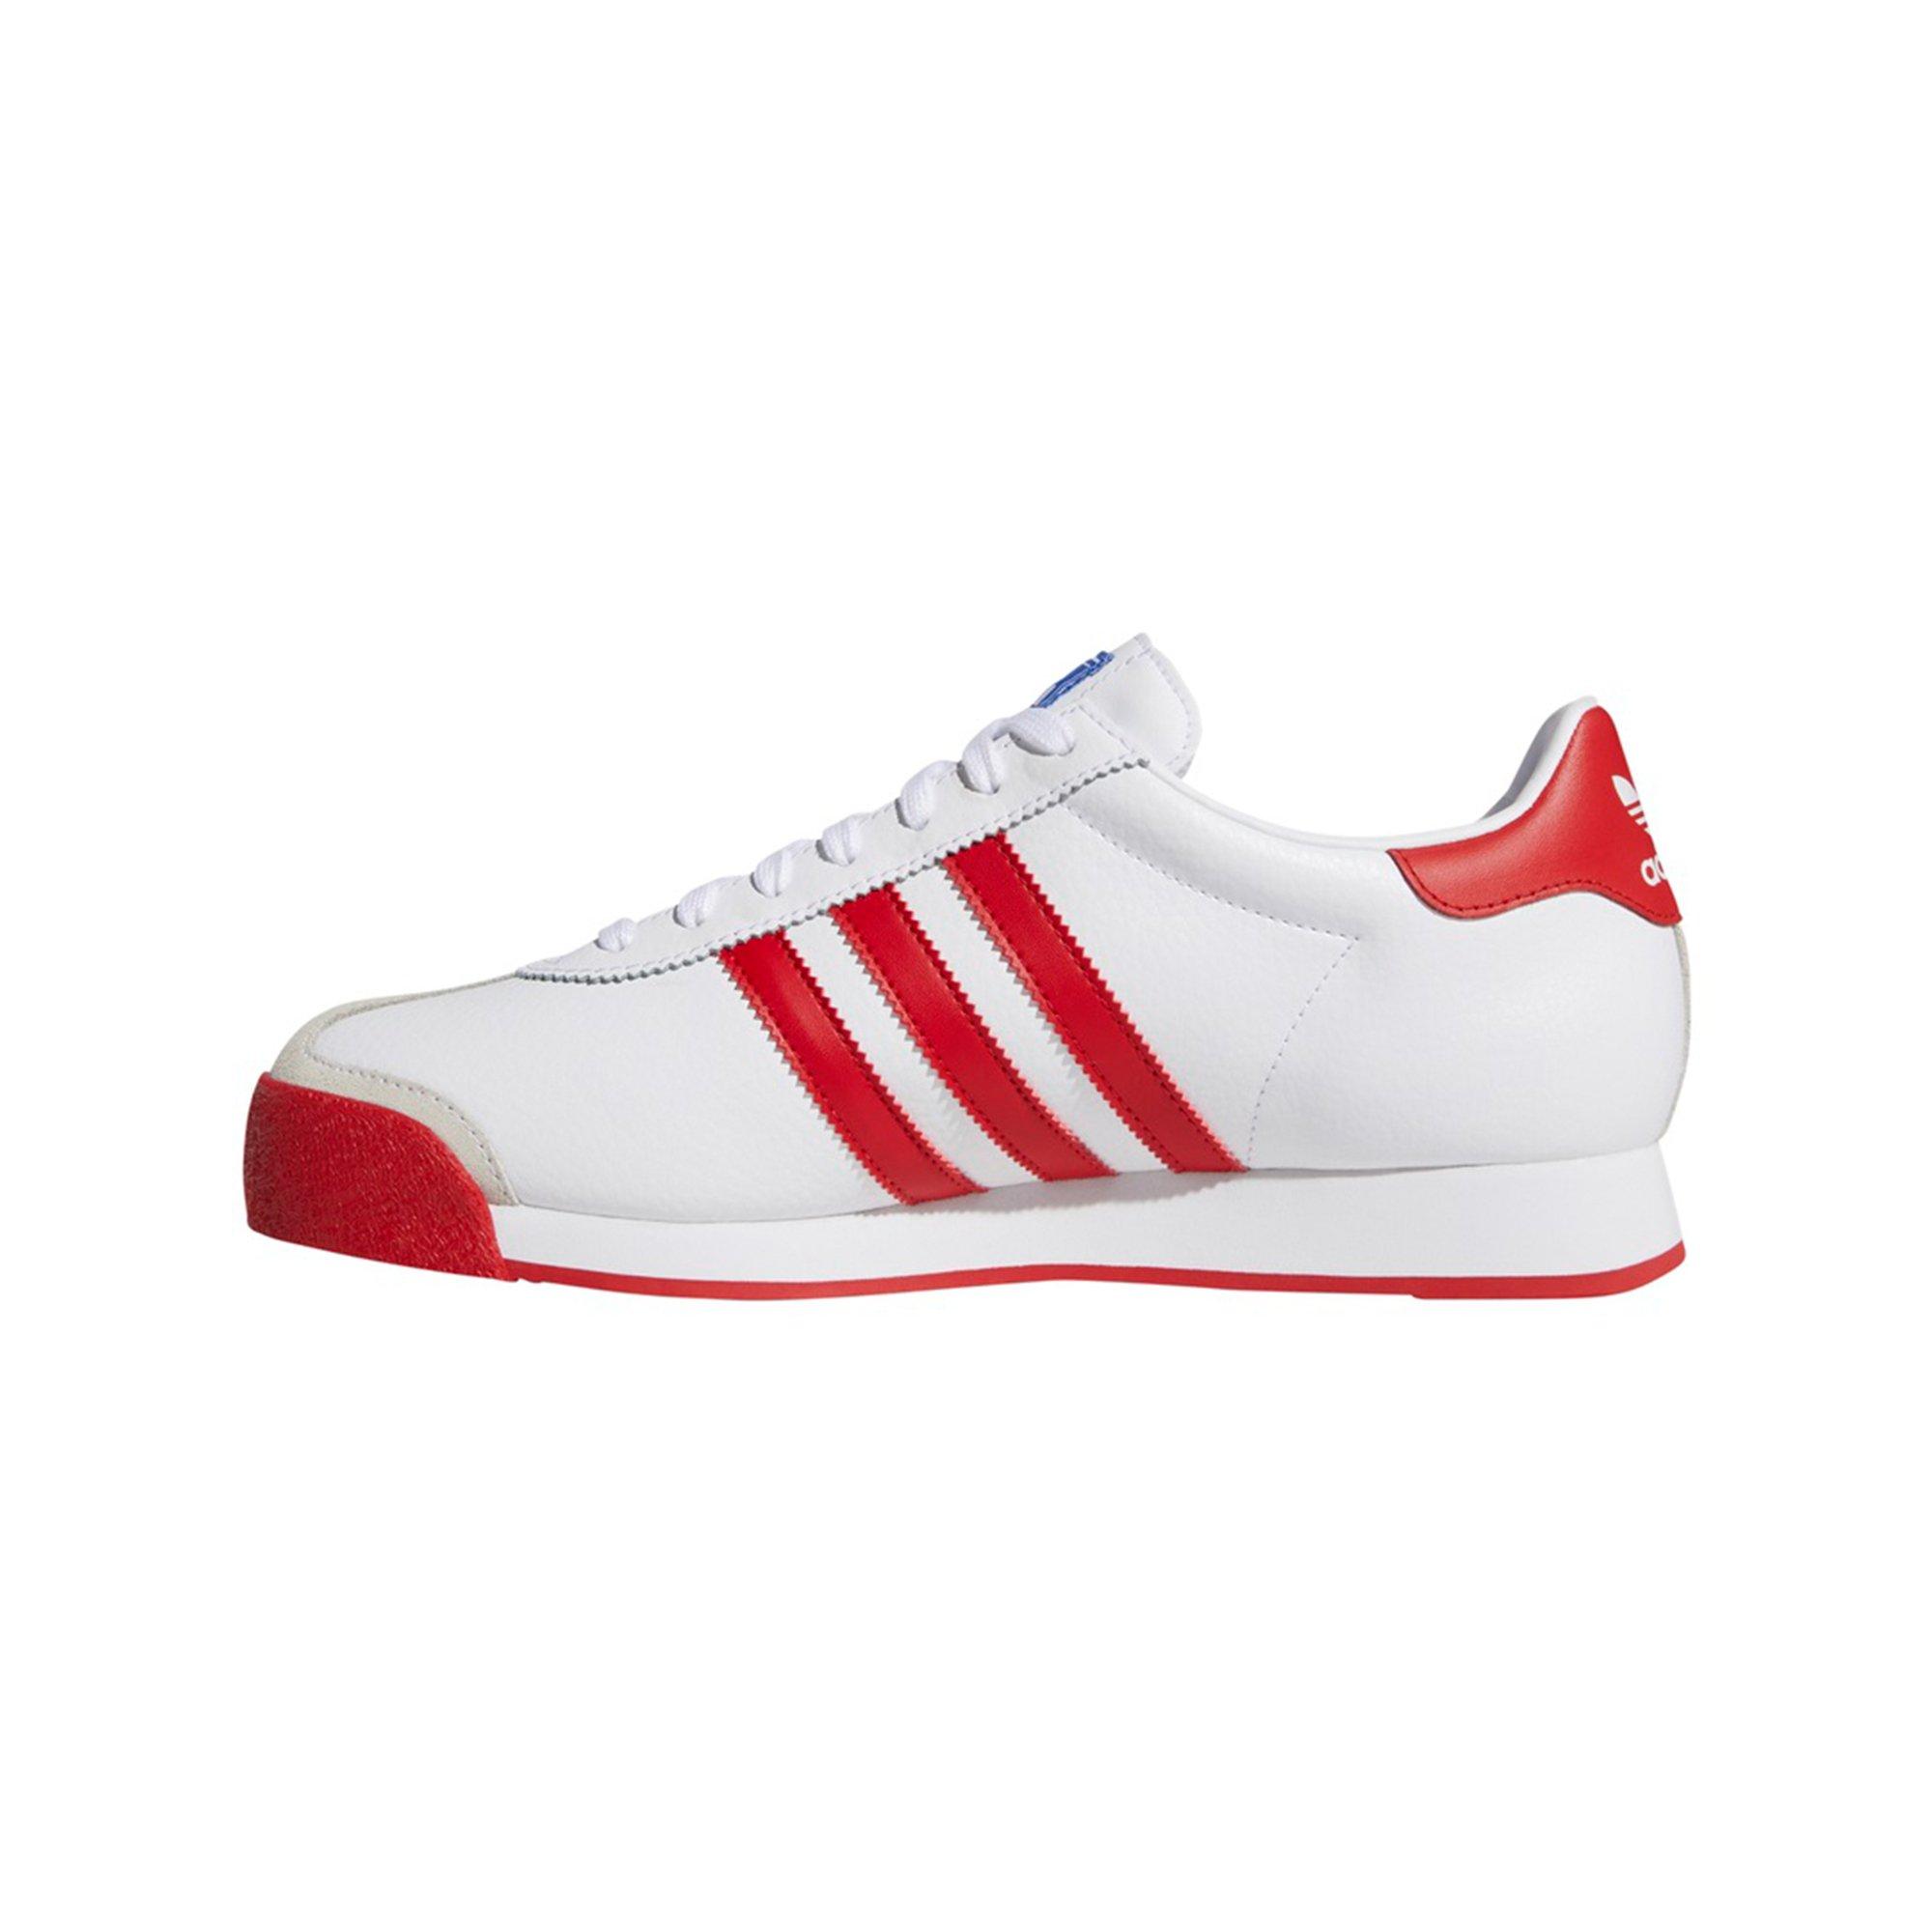 adidas samoa men's red and white